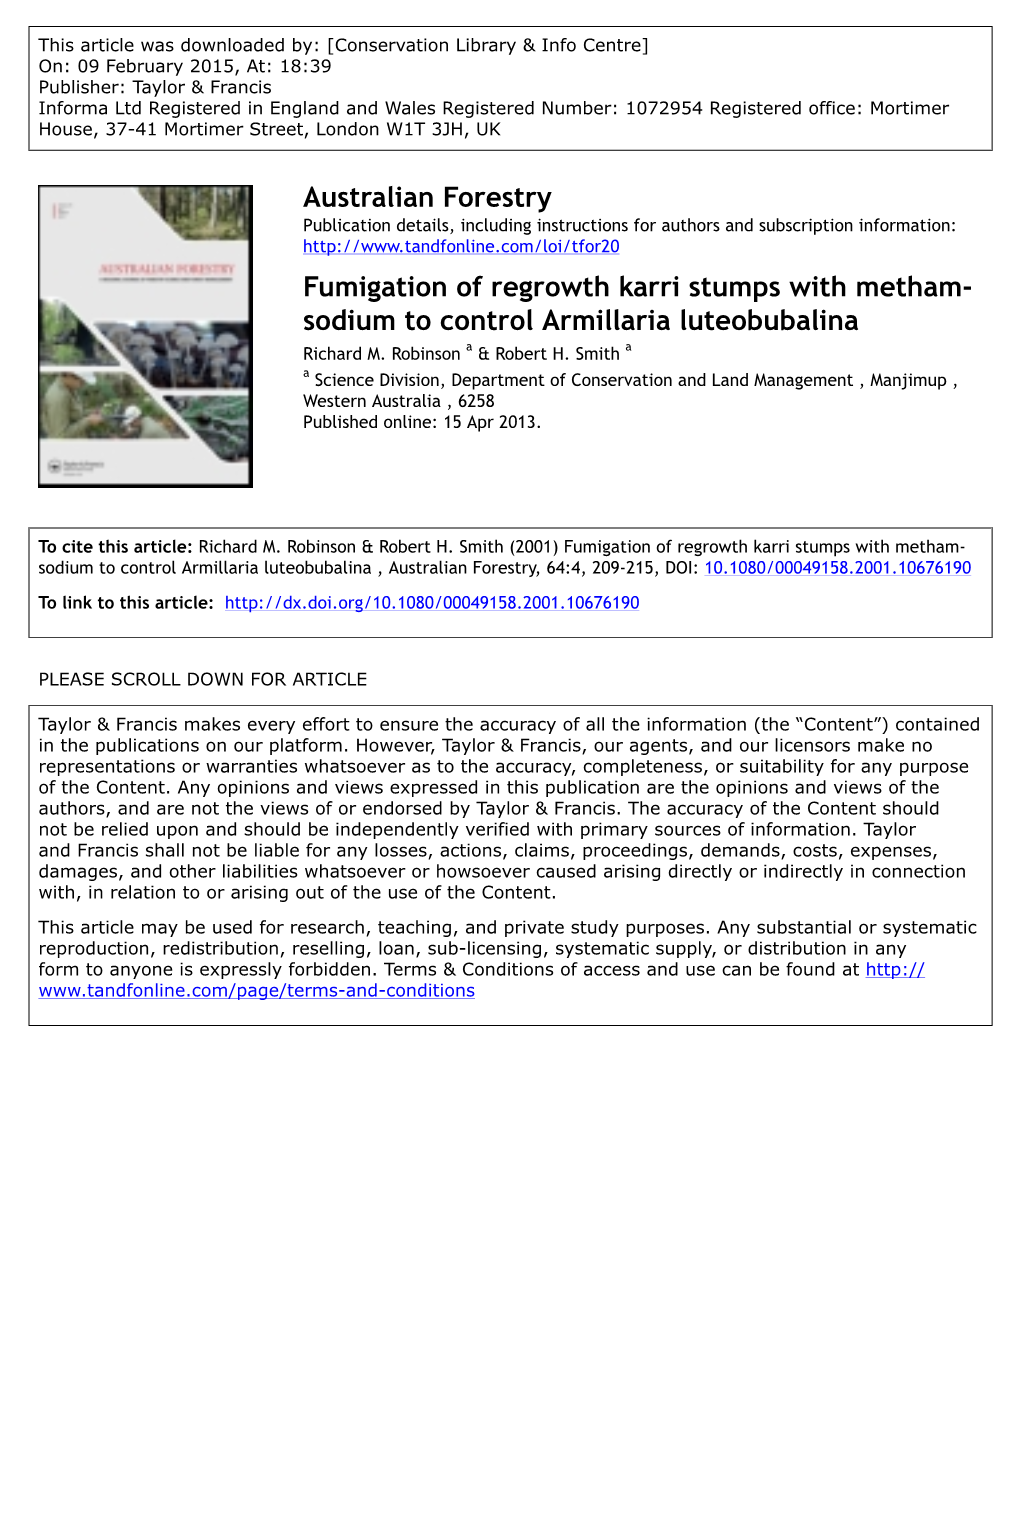 Fumigation of Regrowth Karri Stumps to Control Armillaria